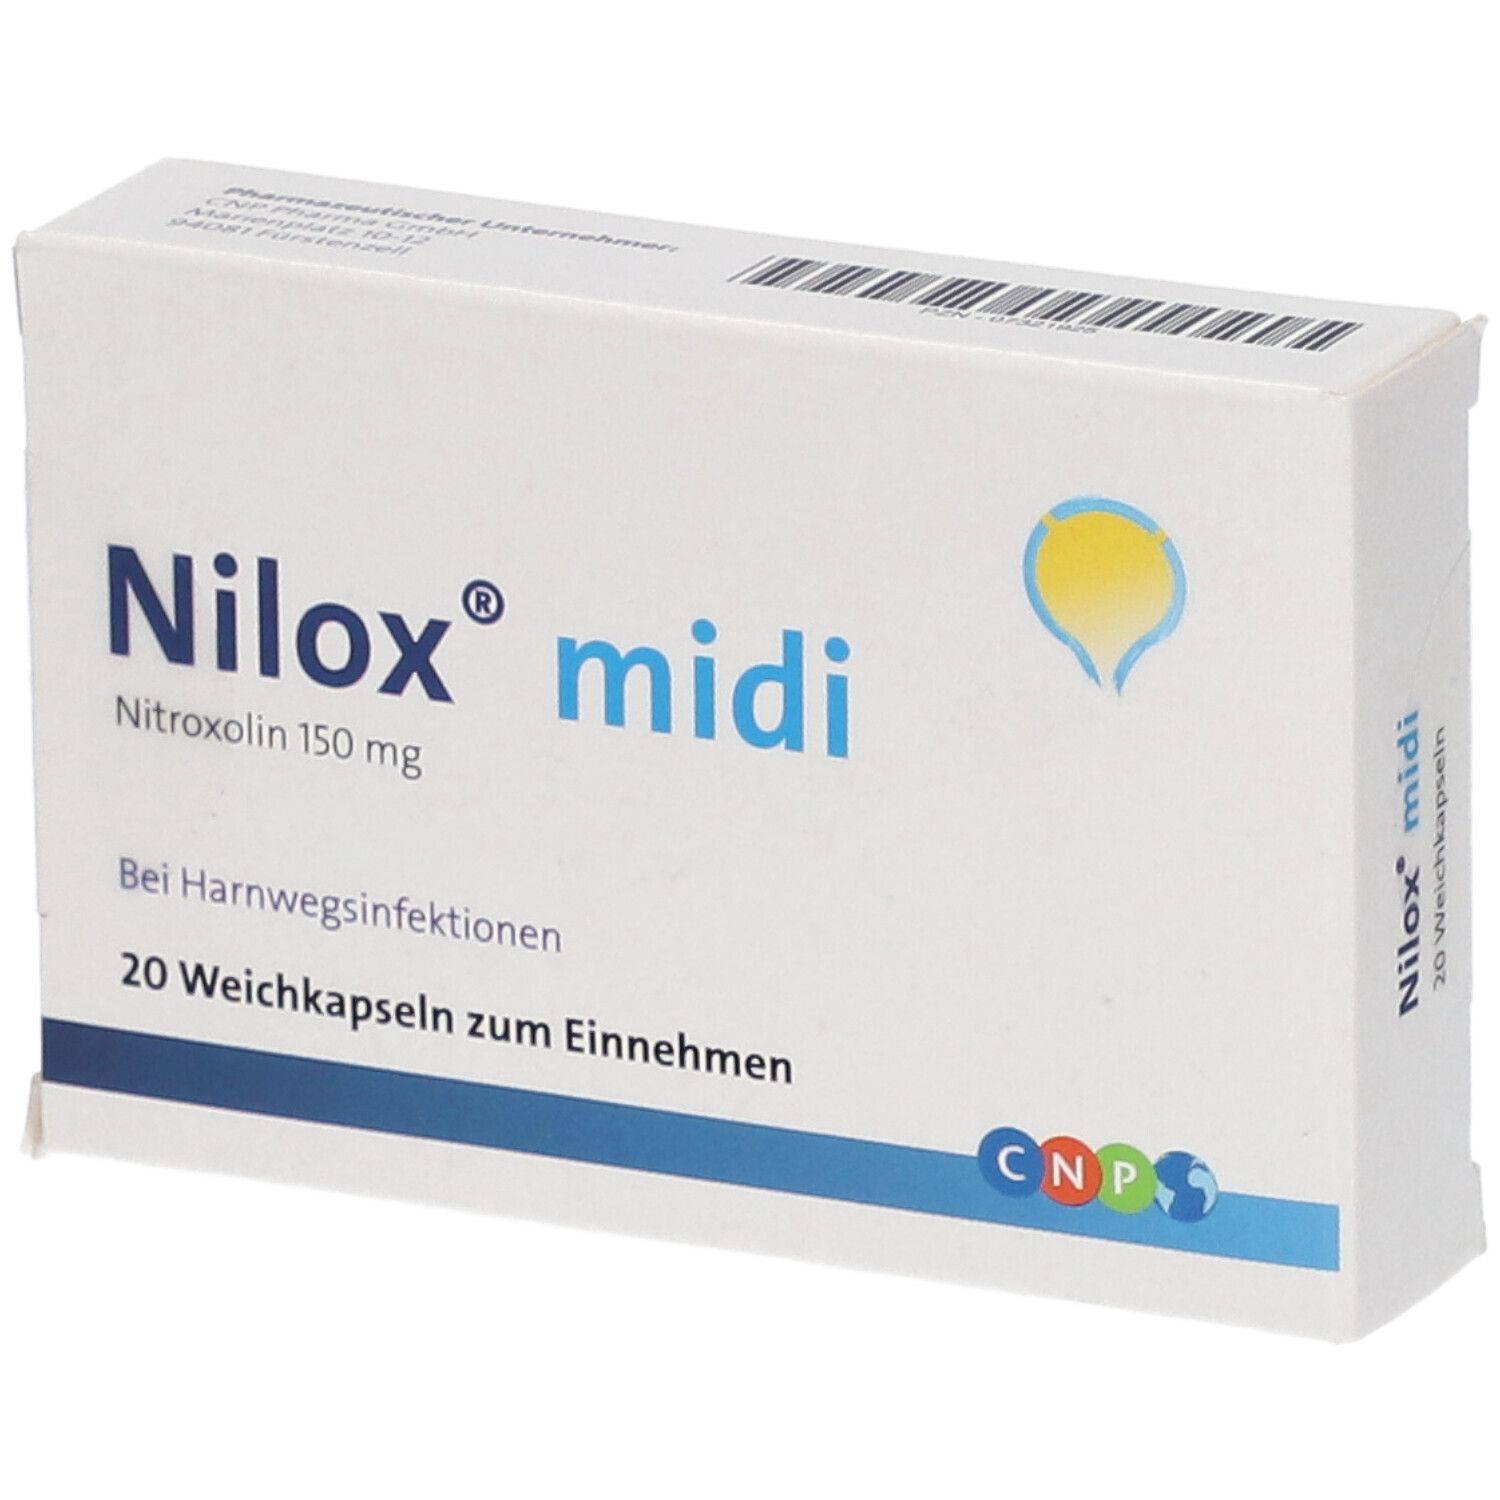 Nilox® midi 150 mg